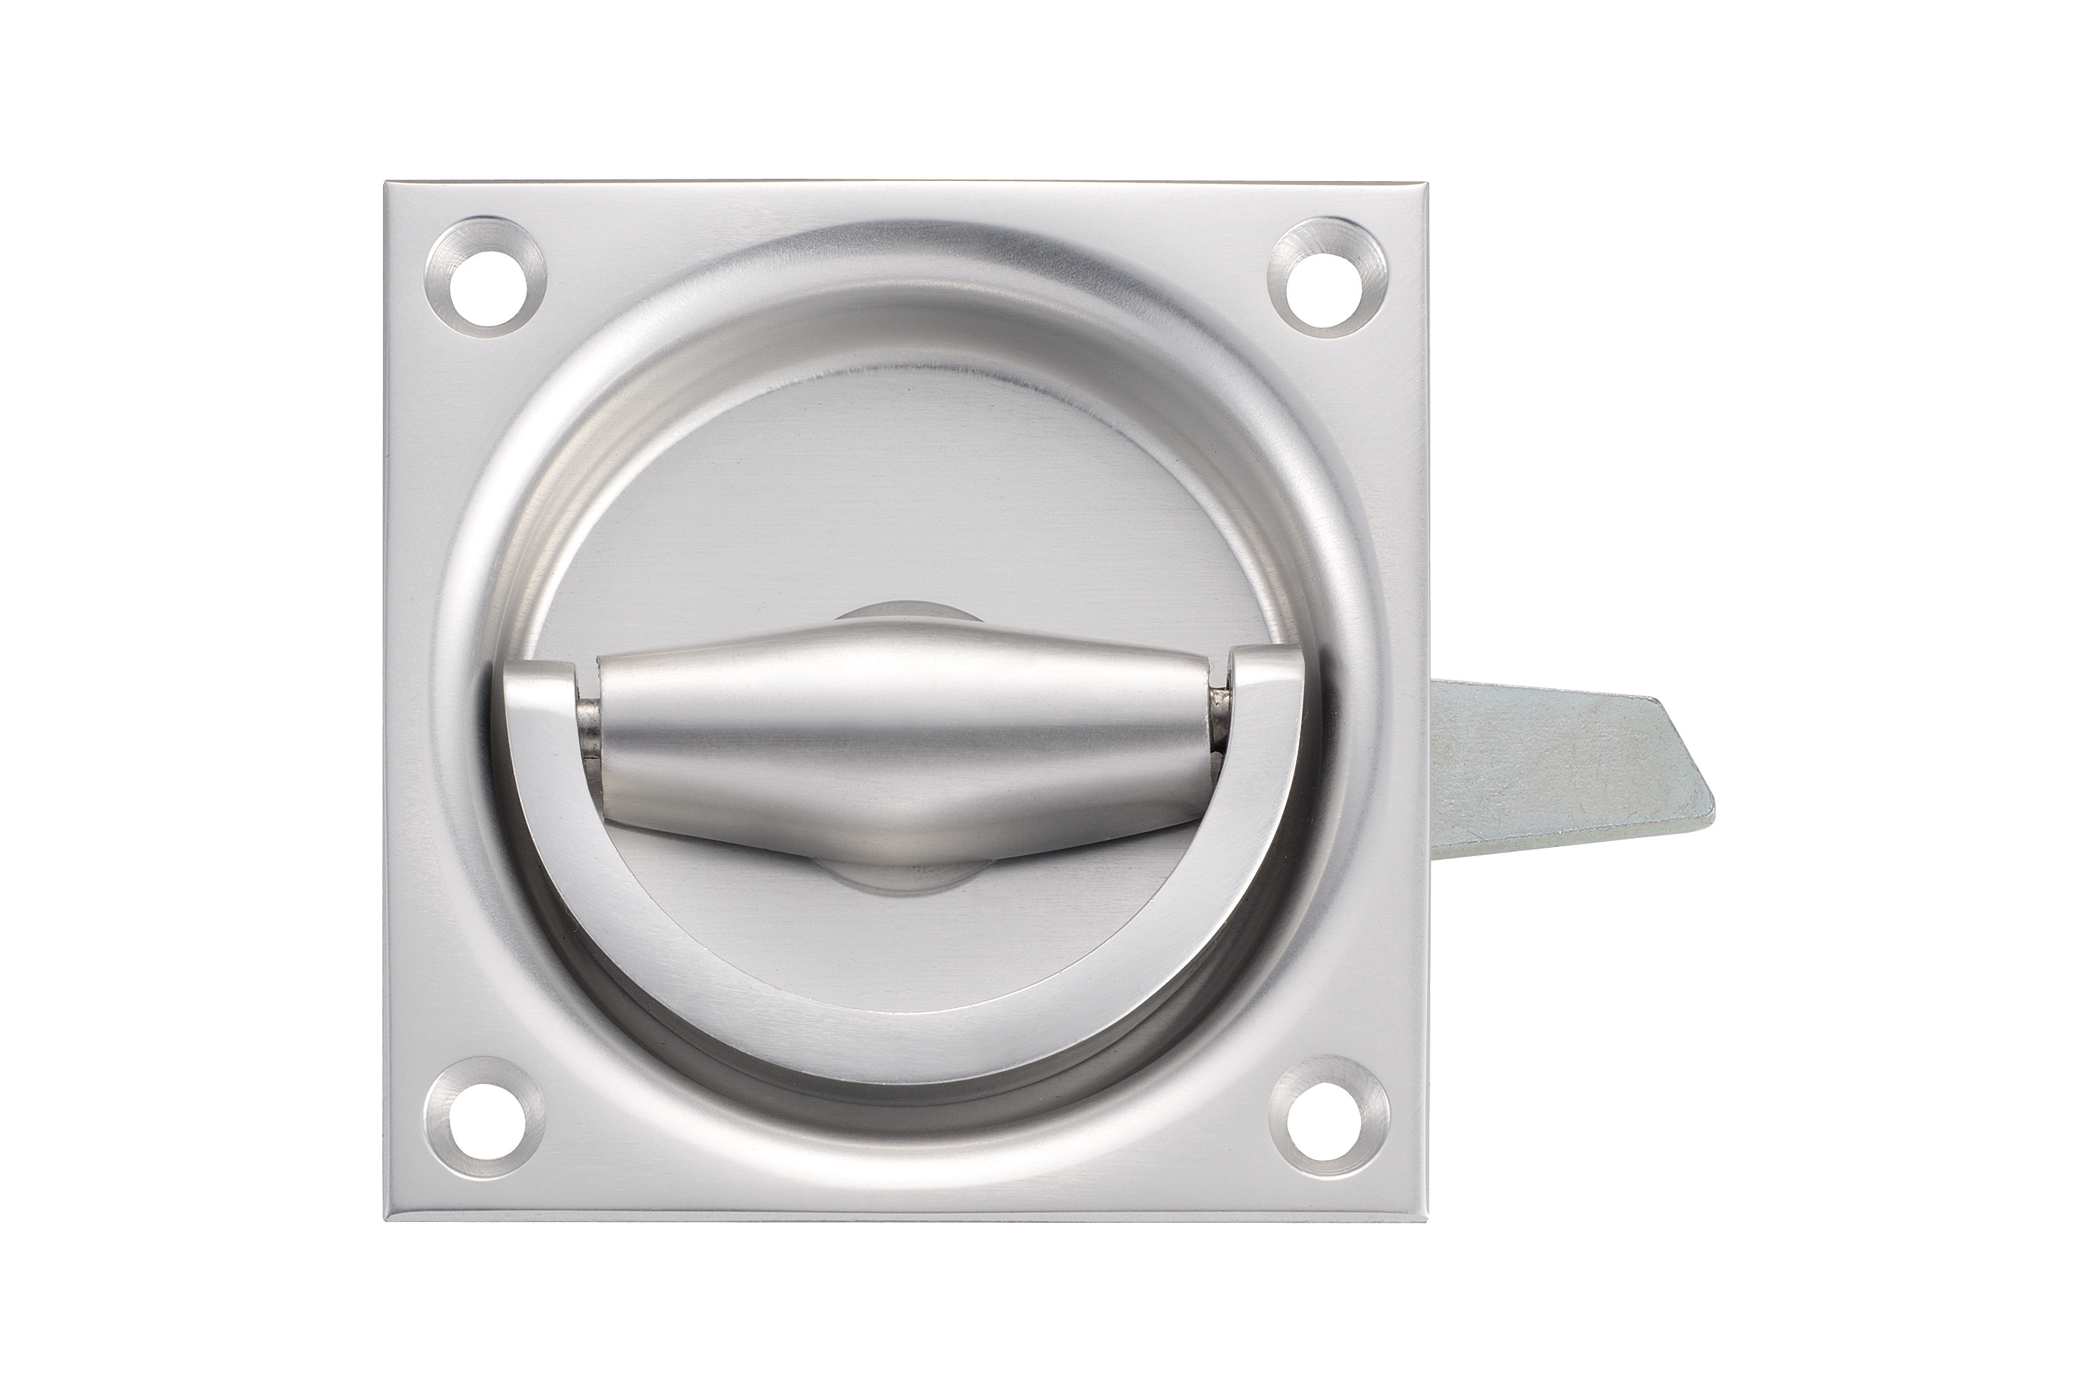 KWS Flush handle 5054 in finish 31 (aluminium, KWS 1 silver anodised)